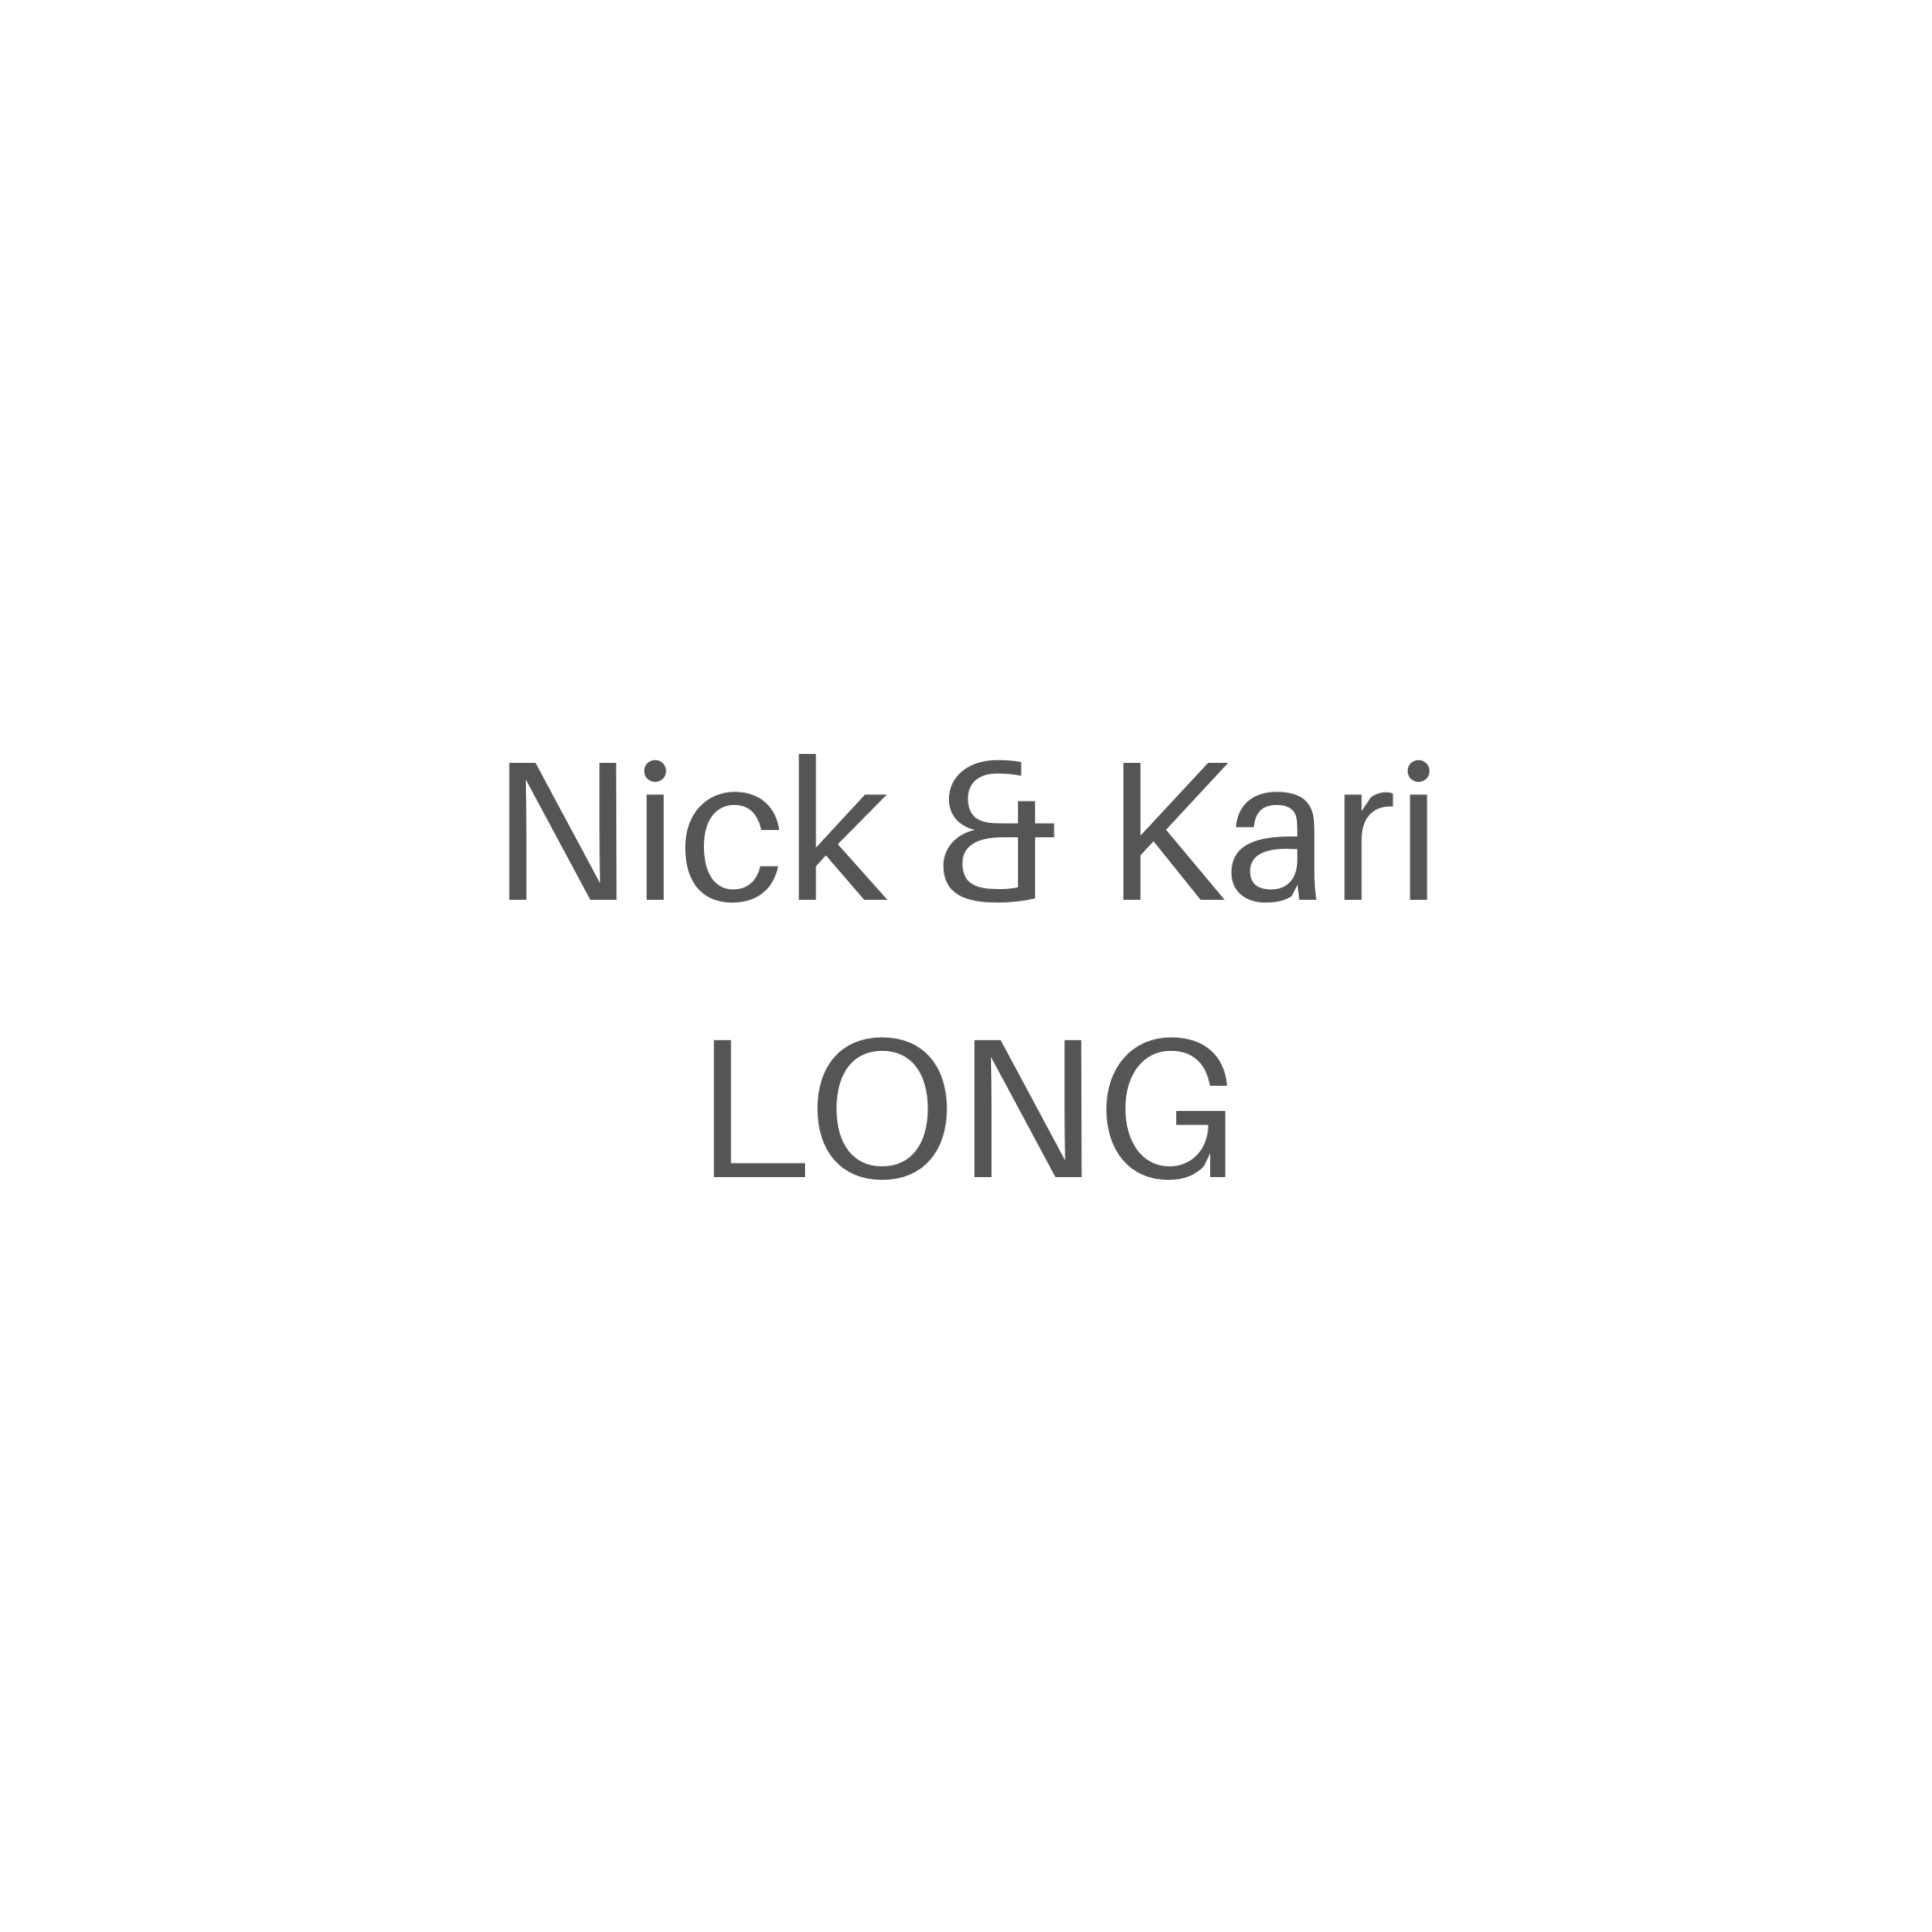 Nick & Kari Long